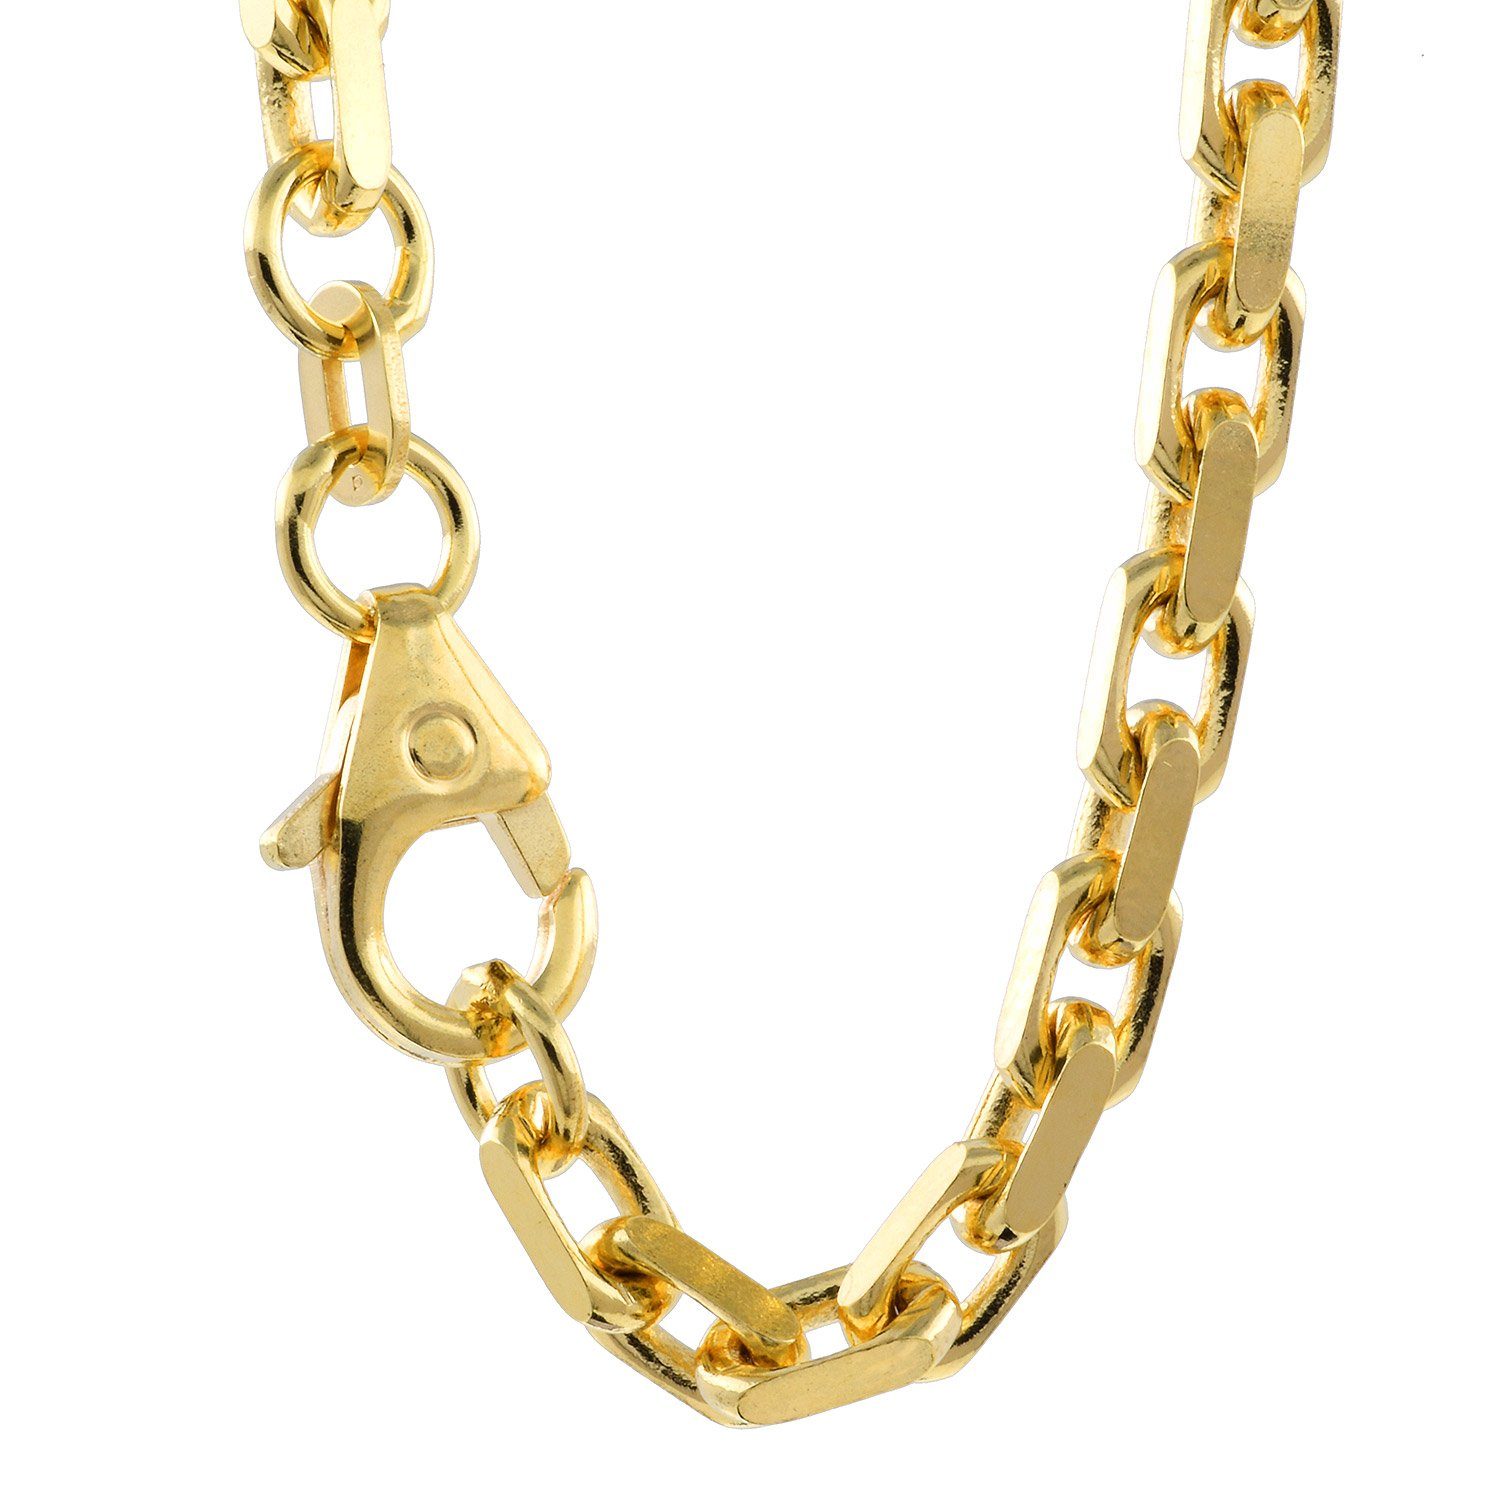 HOPLO Goldarmband Ankerkette diamantiert Länge 21cm - Breite 4,5mm - 585-14 Karat Gold